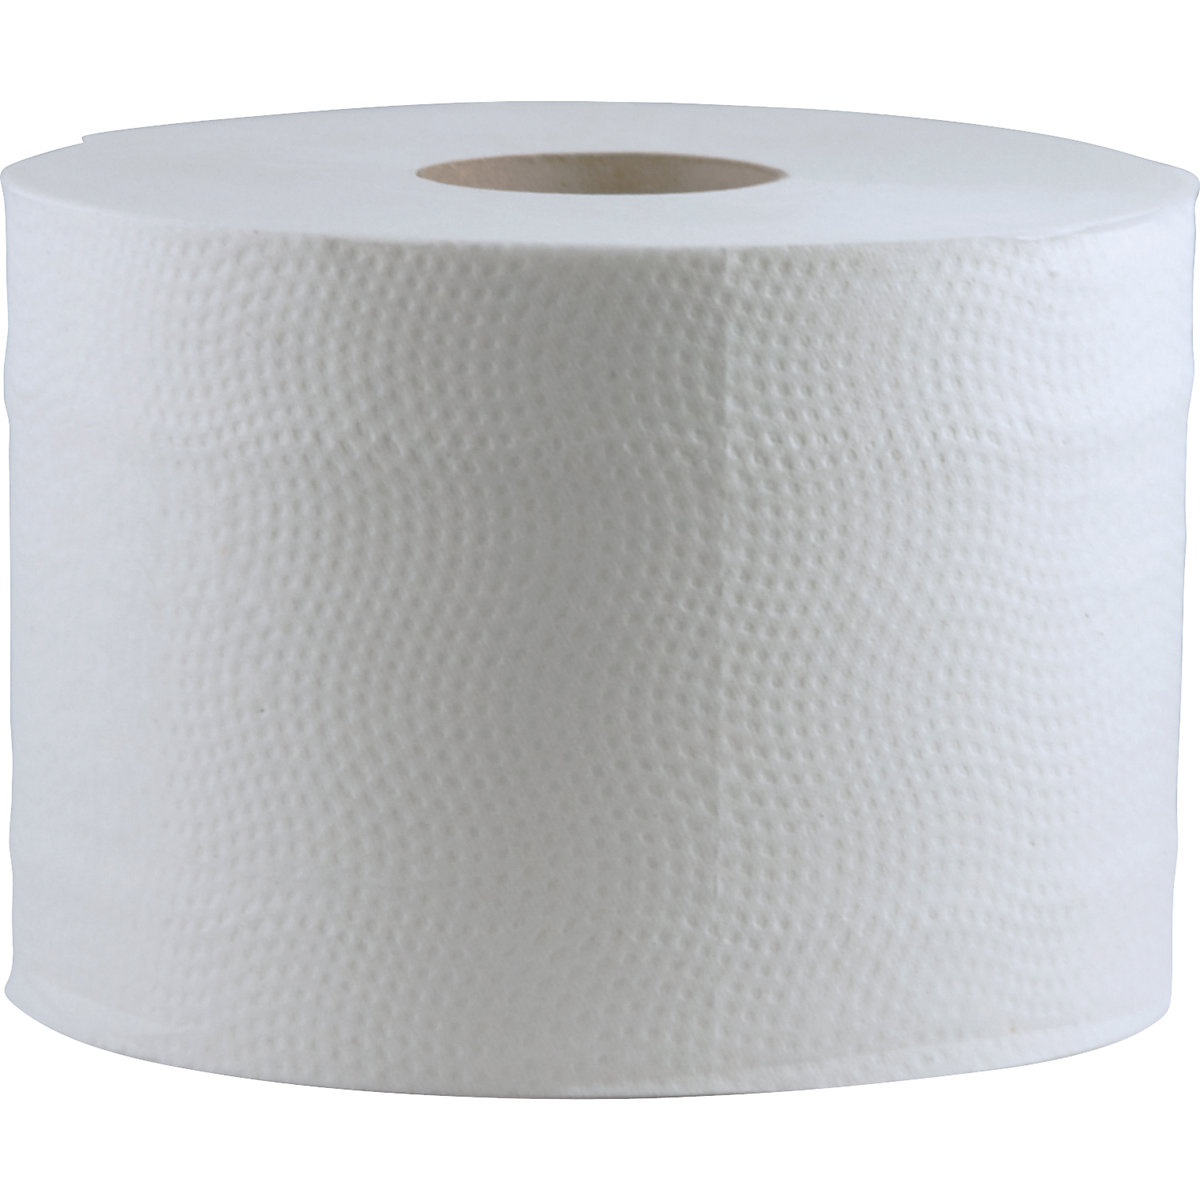 Toaletní papír - CWS